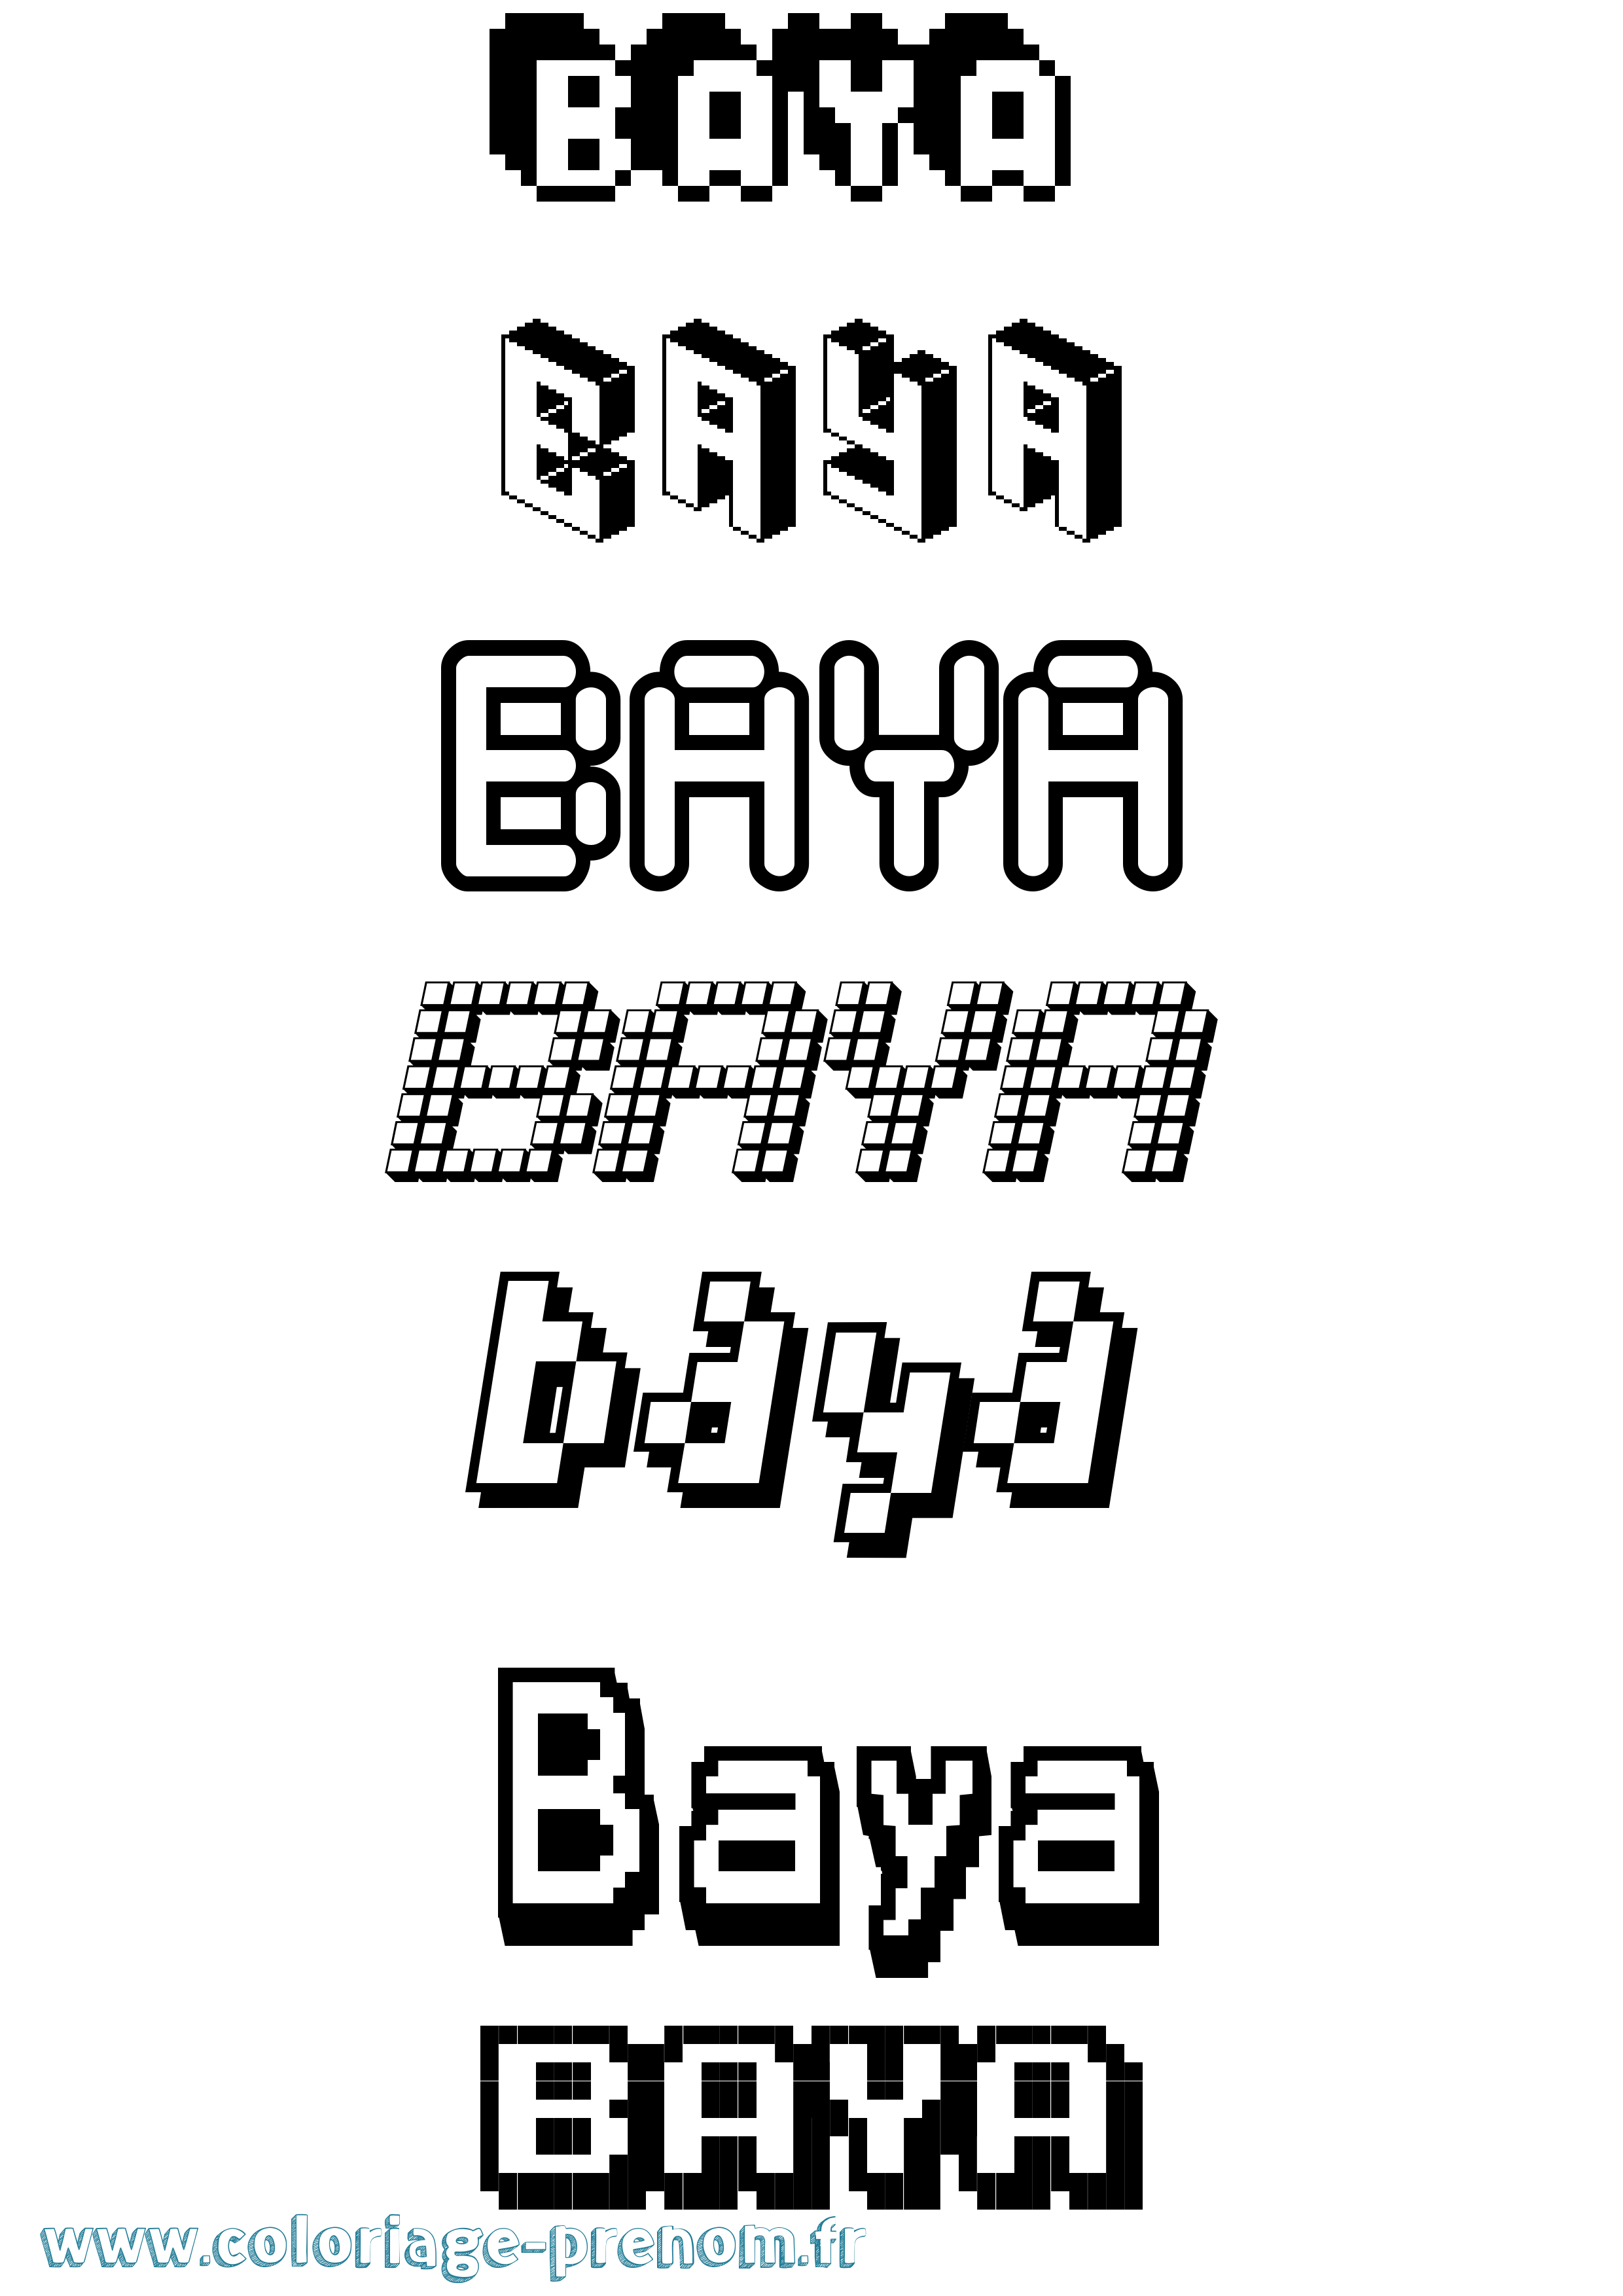 Coloriage prénom Baya